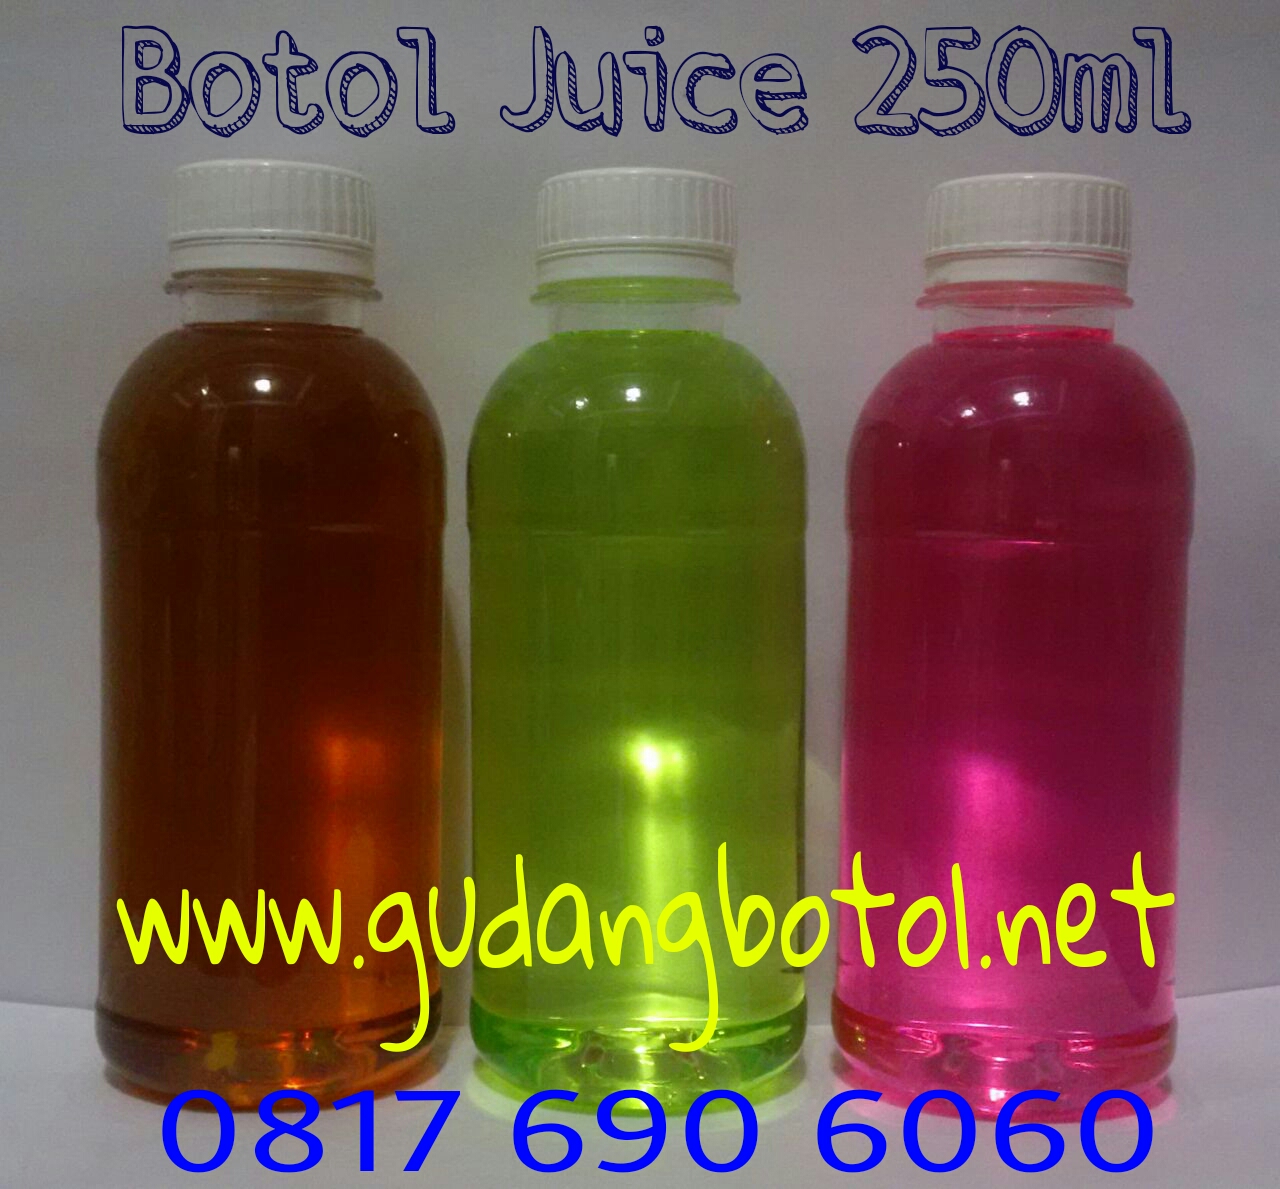 botol juice 250ml